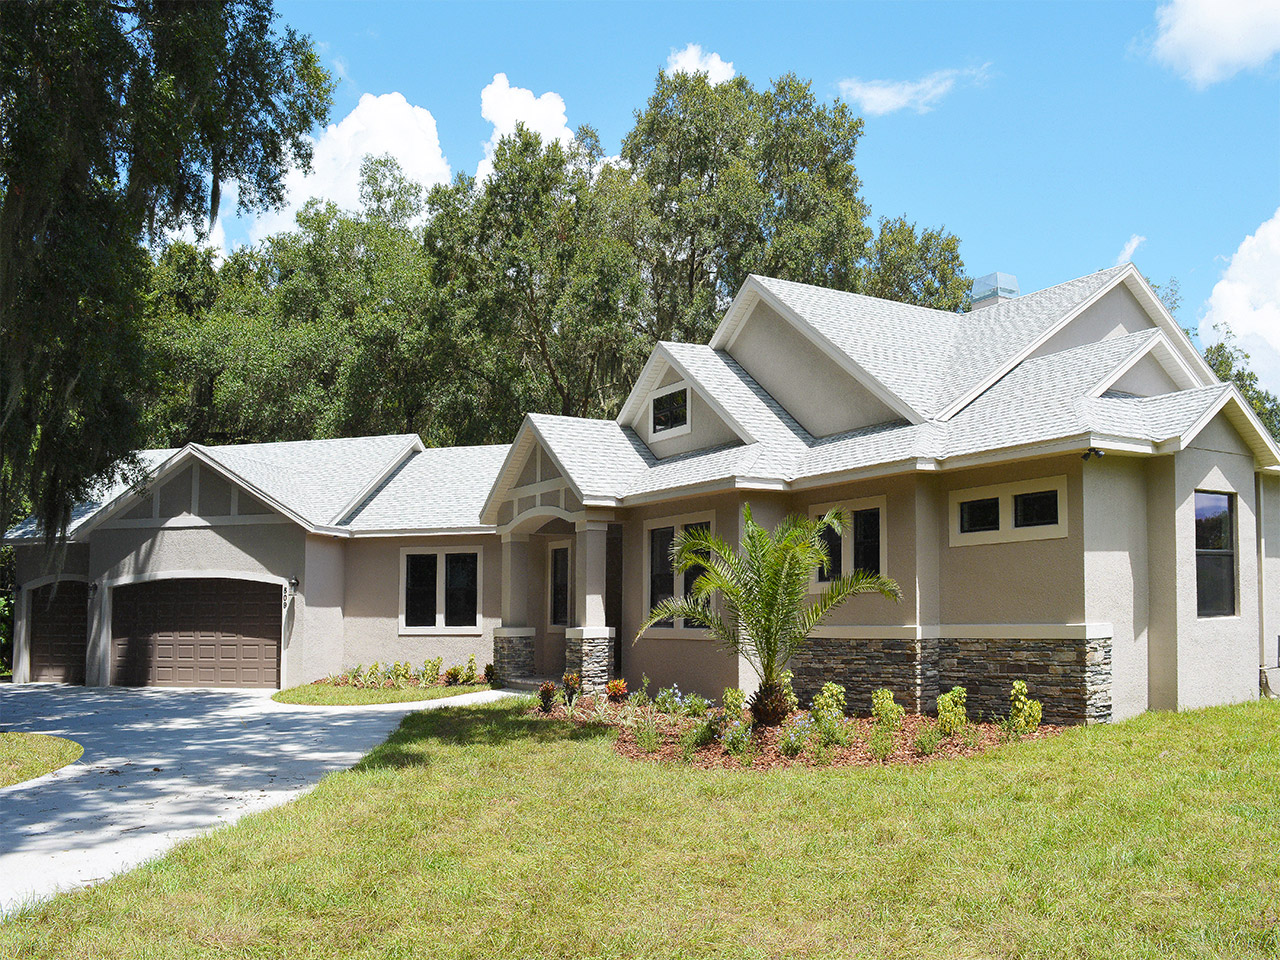 Modern, Mountain Style Custom Home in Valrico Florida